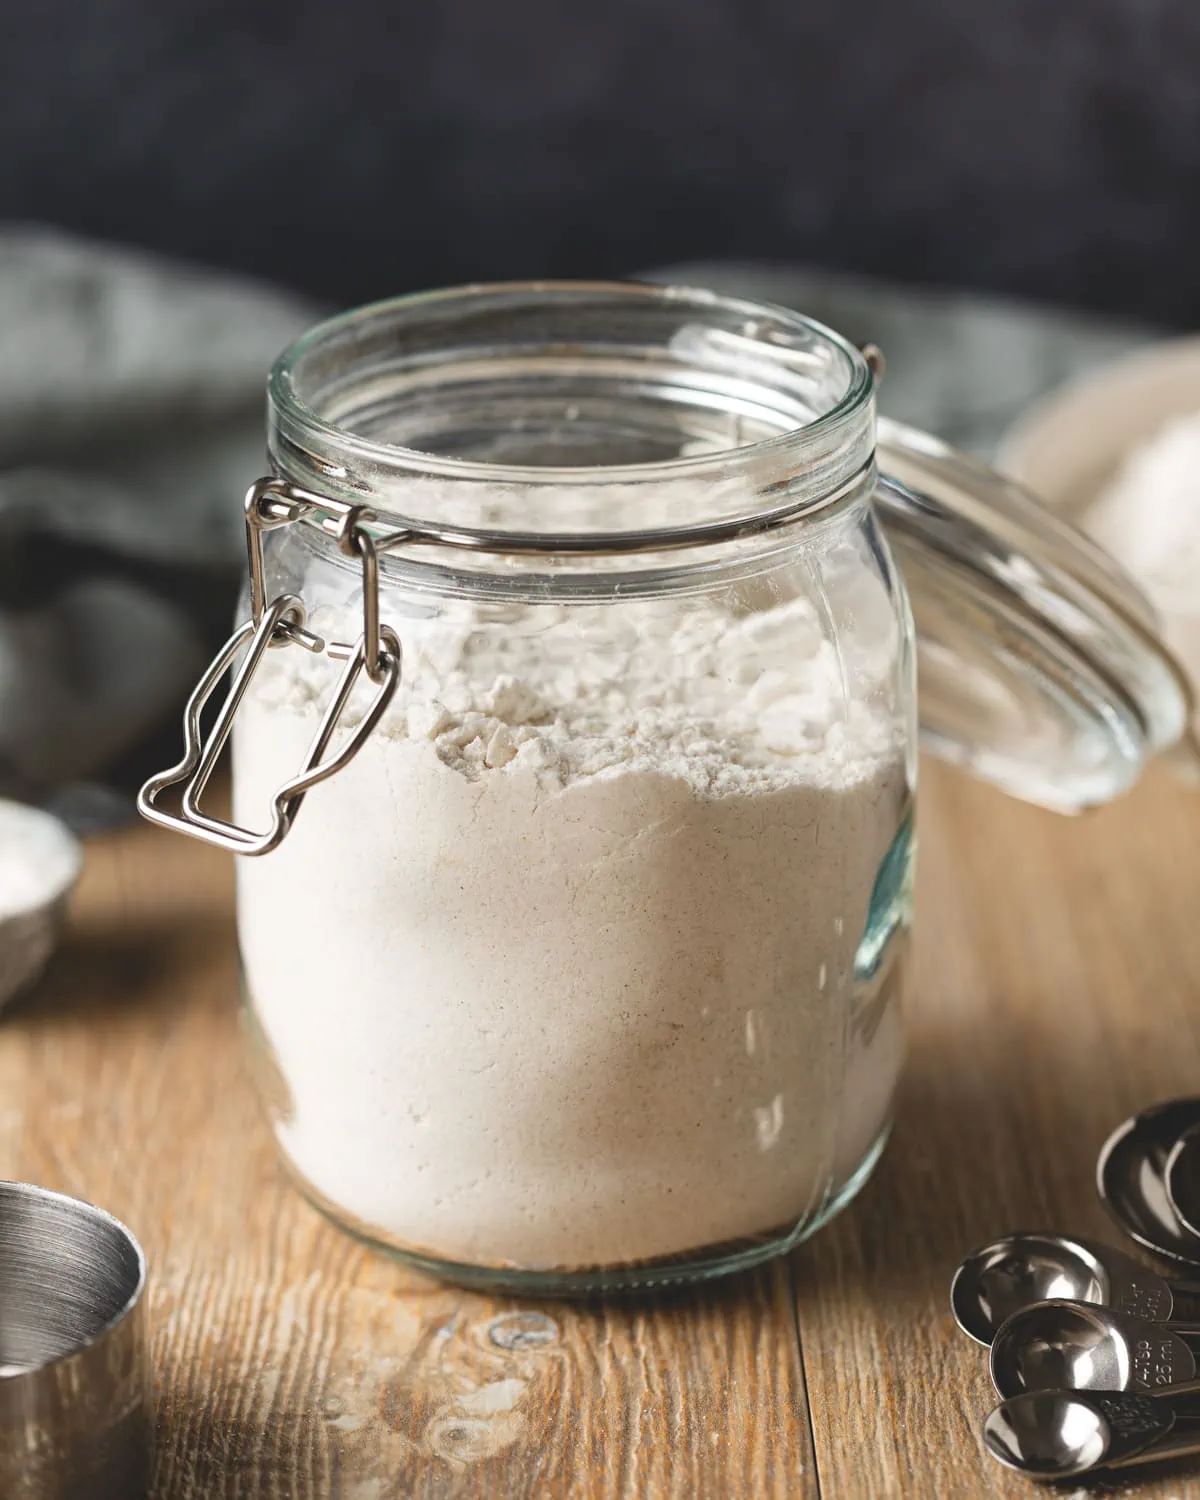 How To Store Gluten Free Flour